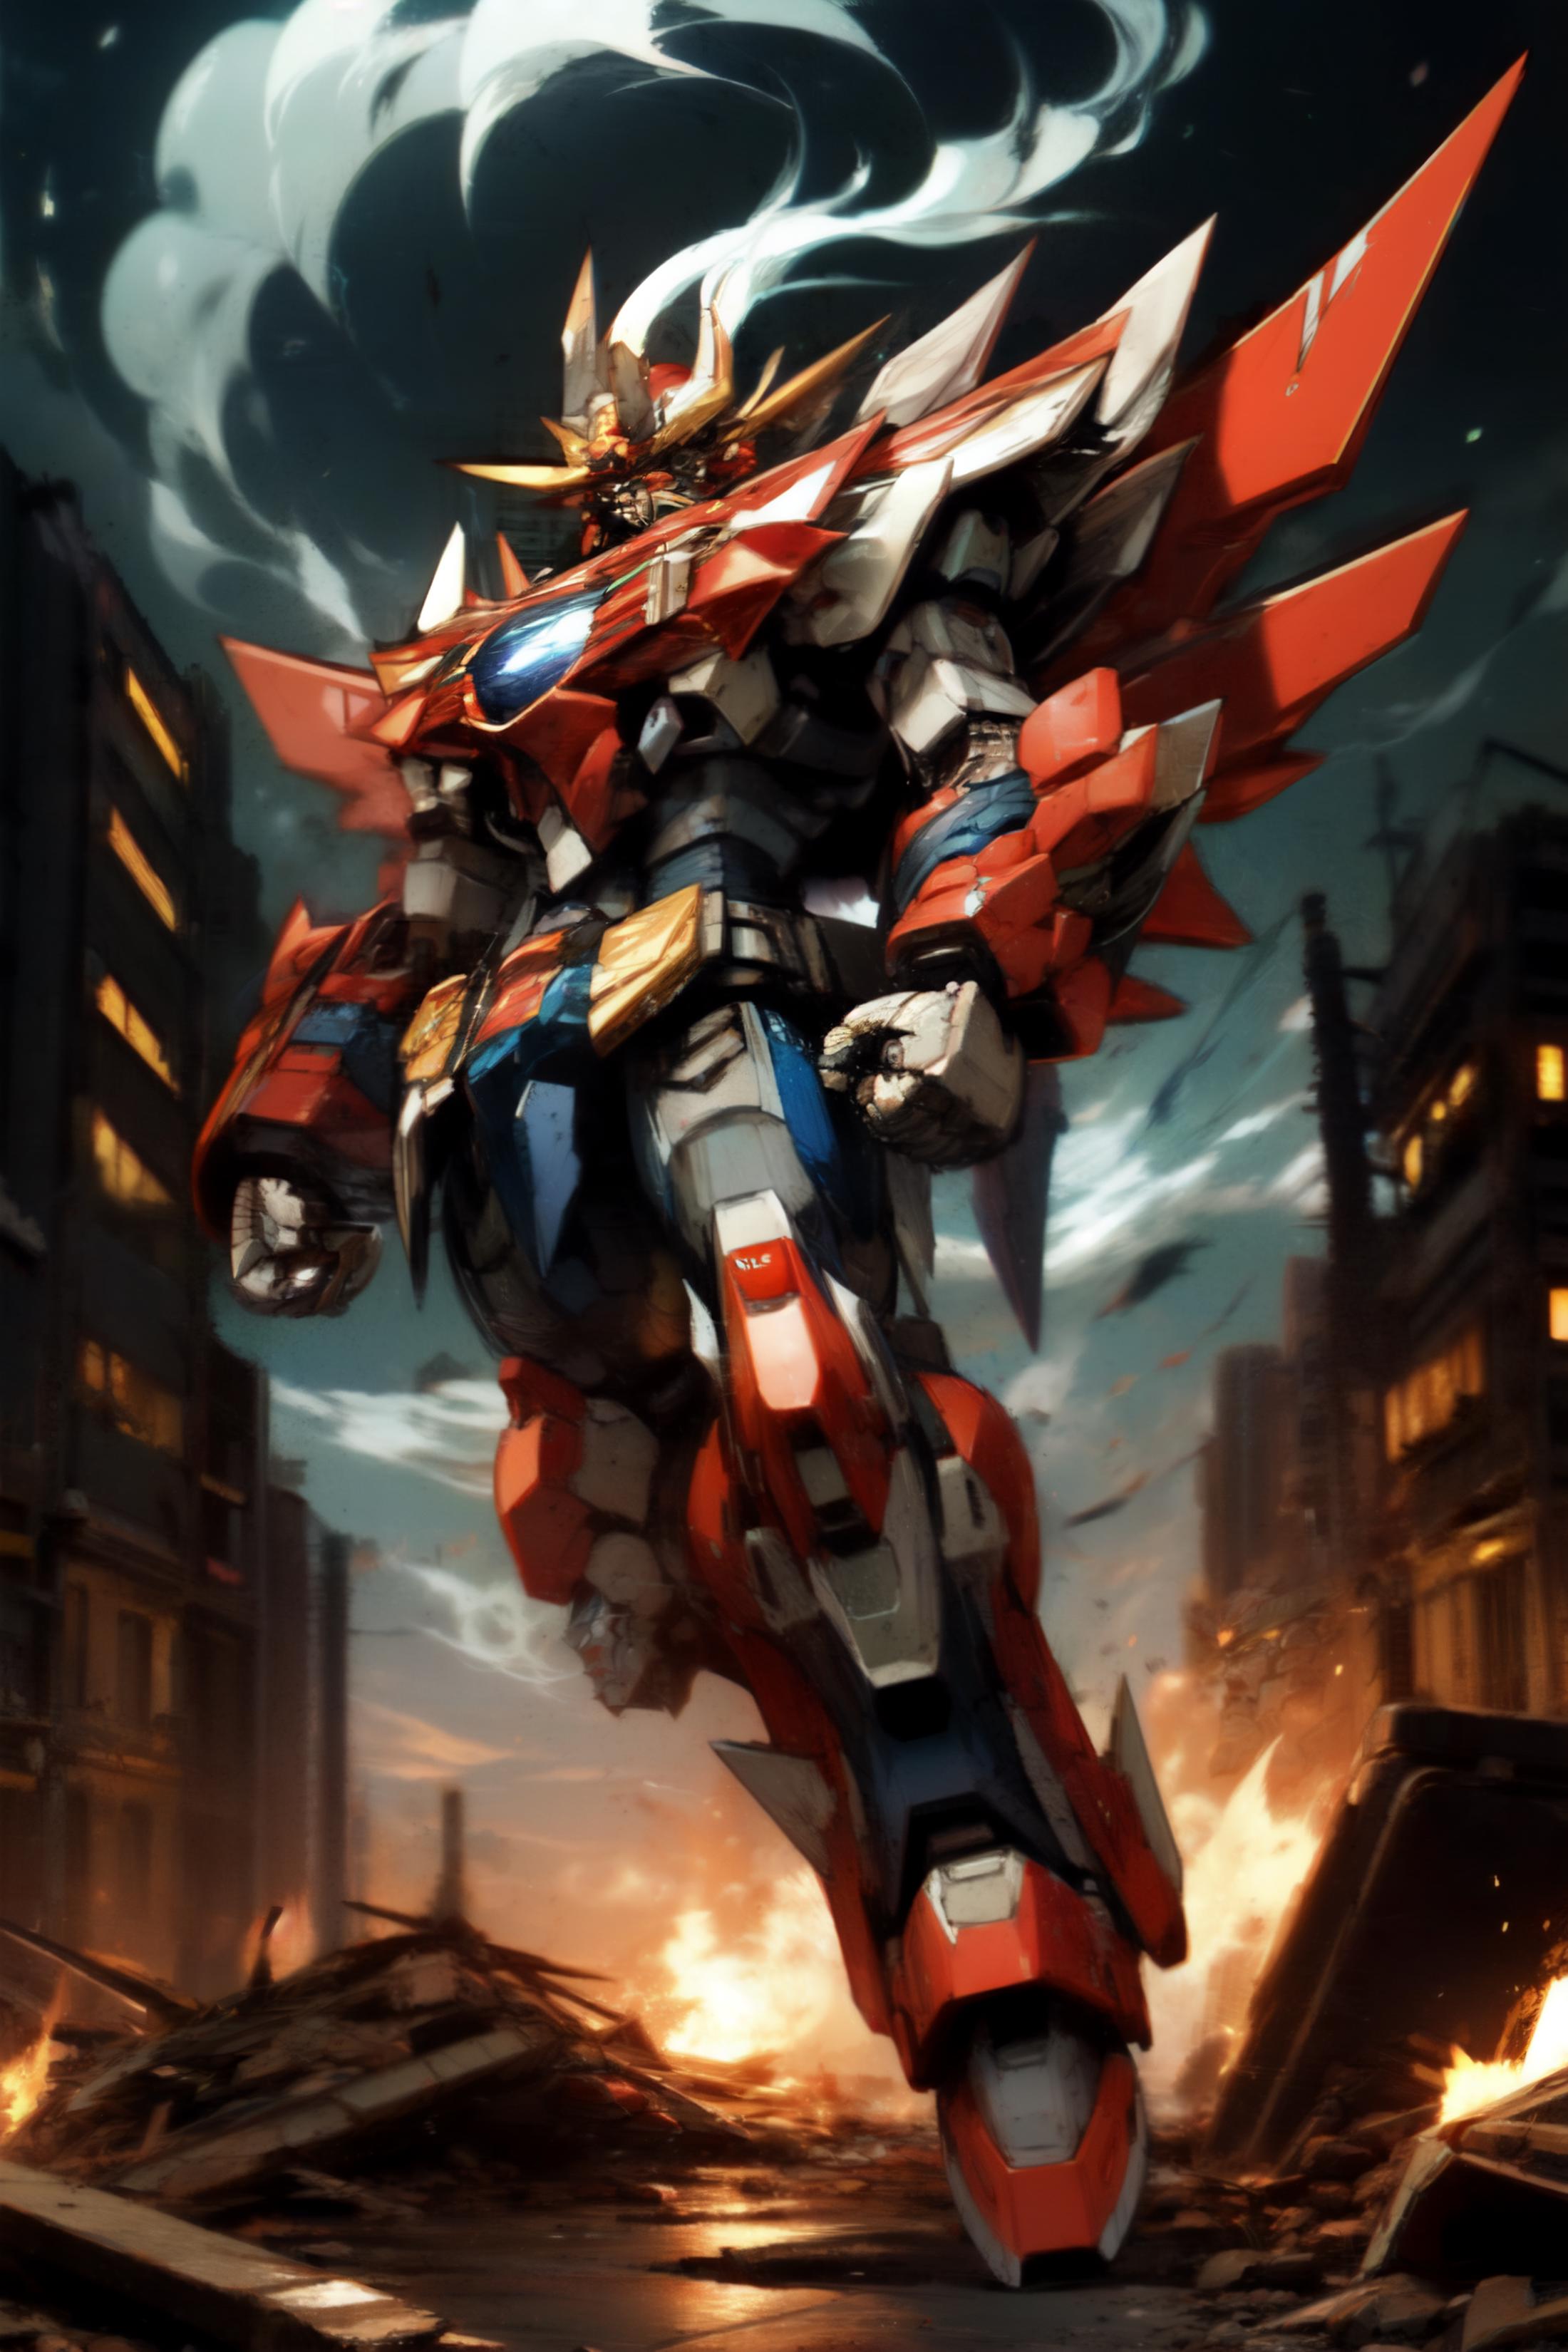 Super robot diffusion(Gundam, EVA, ARMORED CORE, BATTLE TECH like mecha lora) image by DanT000